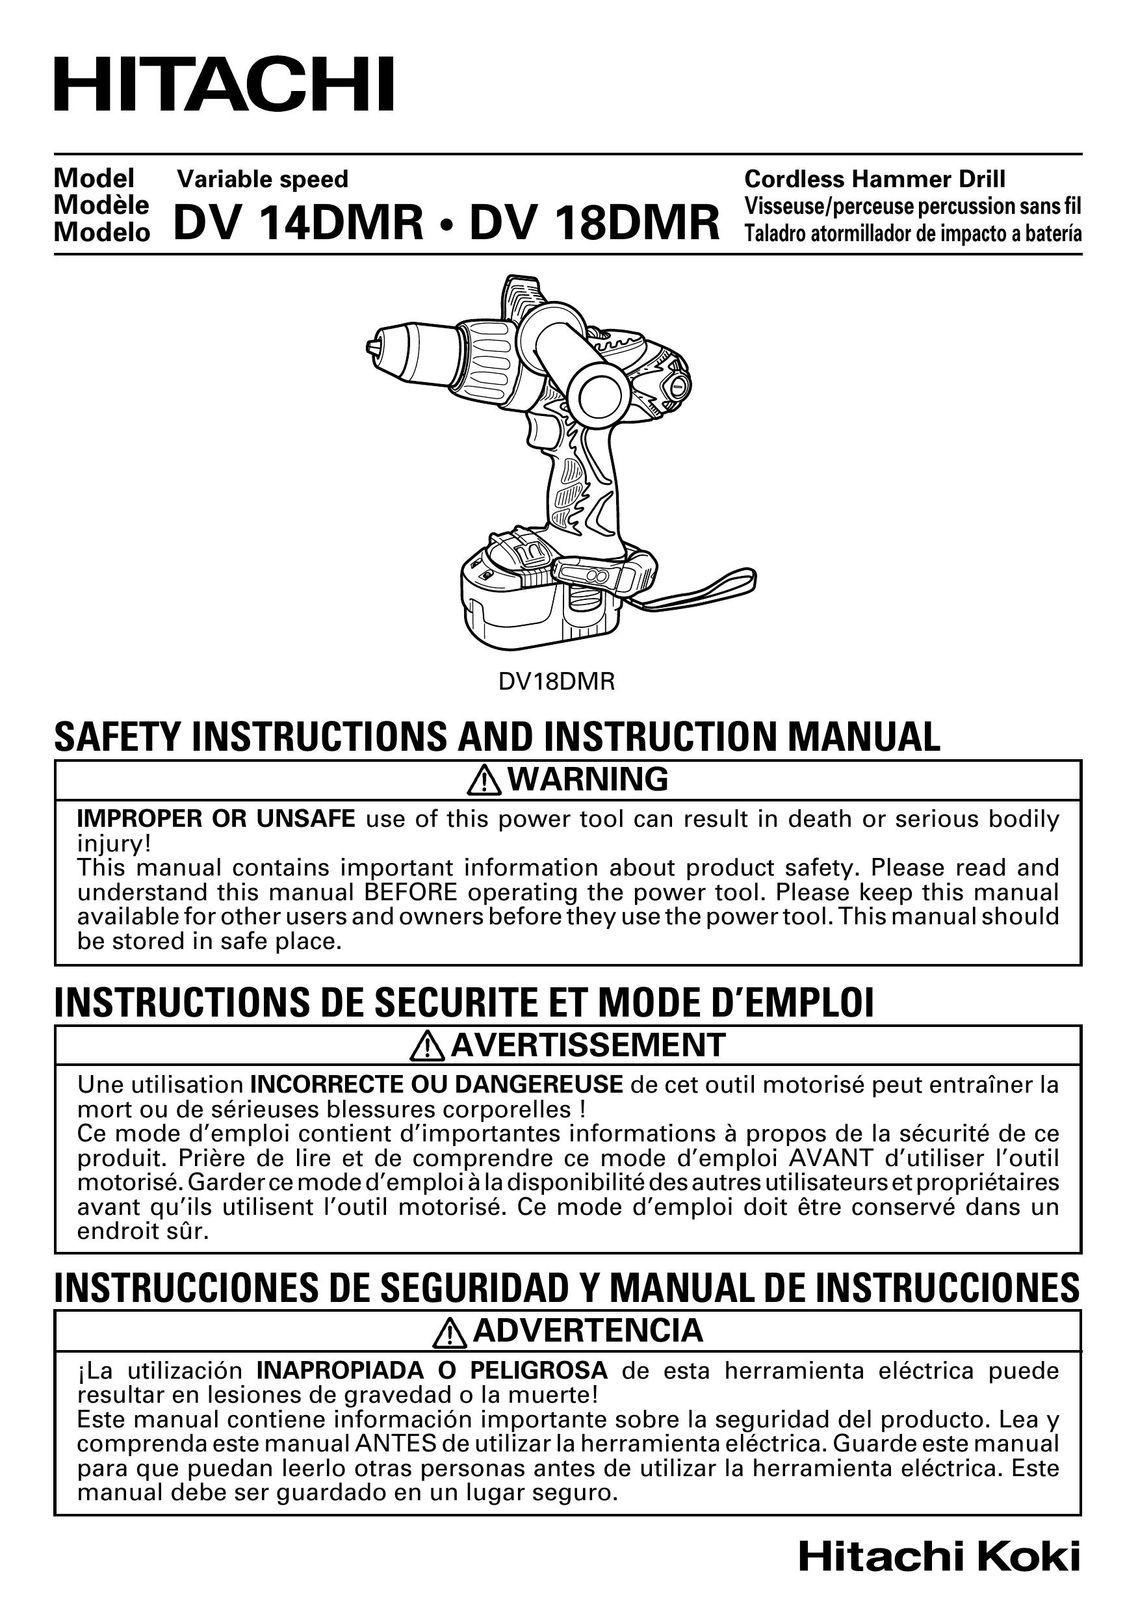 Hitachi DV14DMR Cordless Drill User Manual